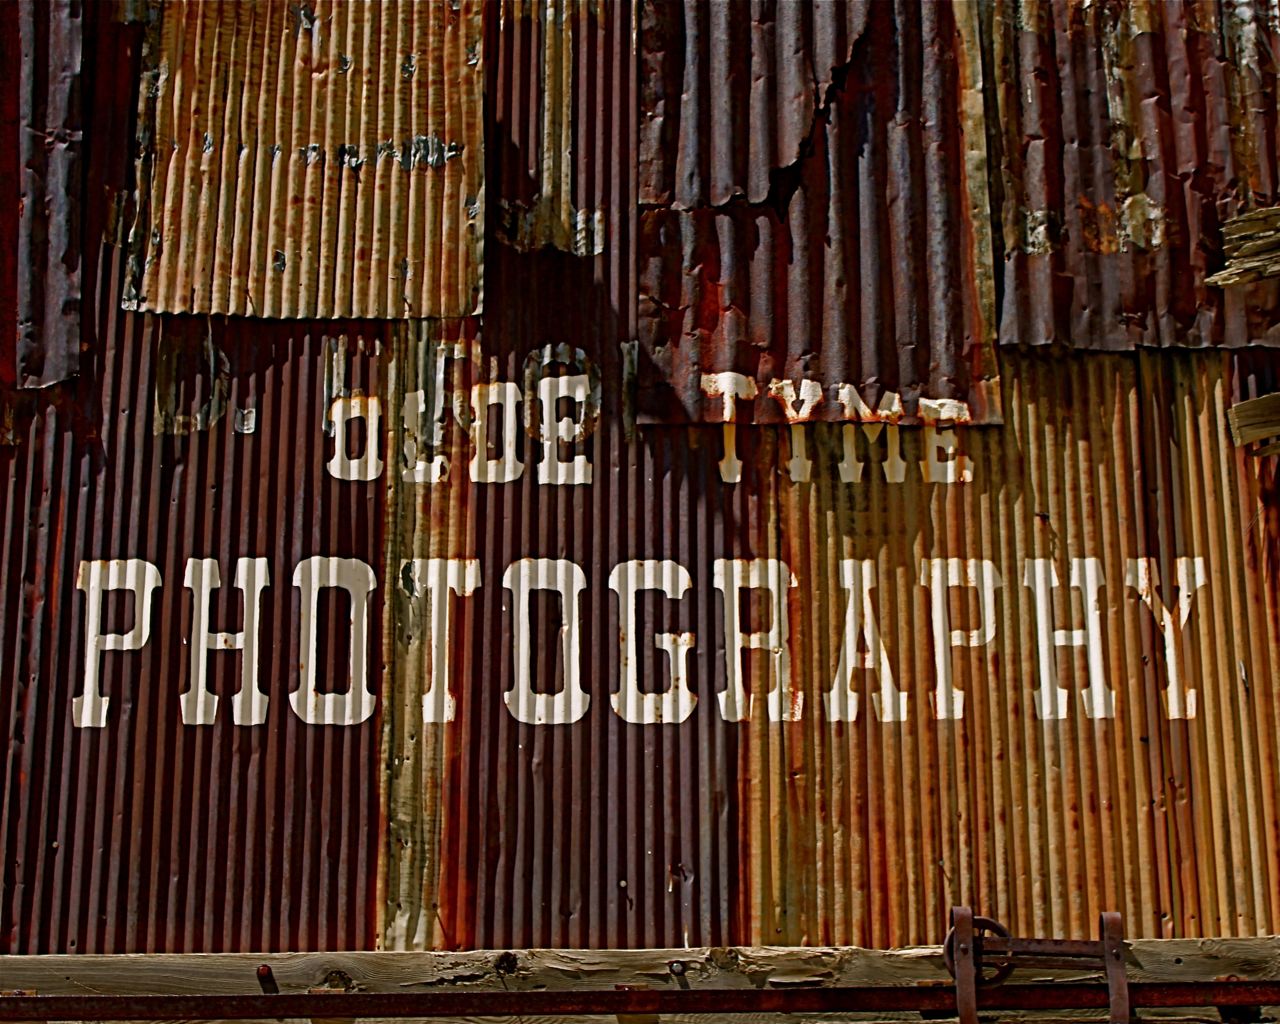 Olde Tyme Photography, Silverton, CO